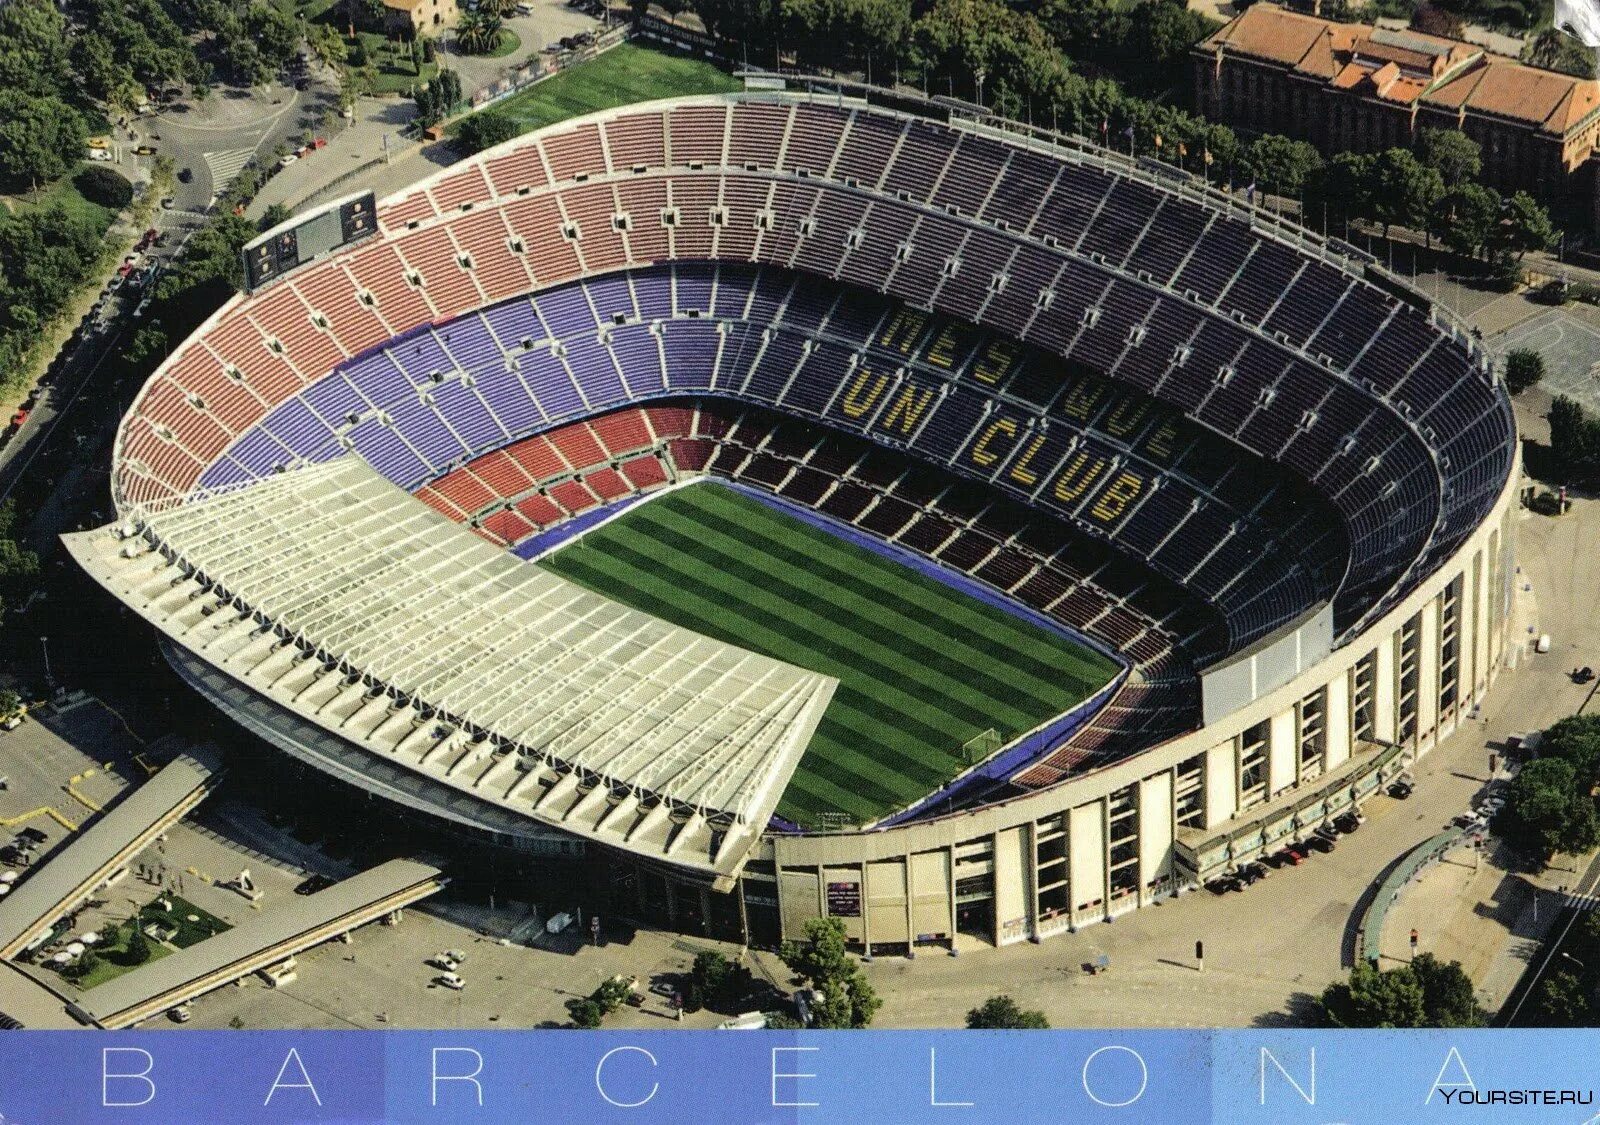 Стадион Camp nou. Барселона Камп ноу. Стадион Барселоны. Камп ноу 1957. Какой камп